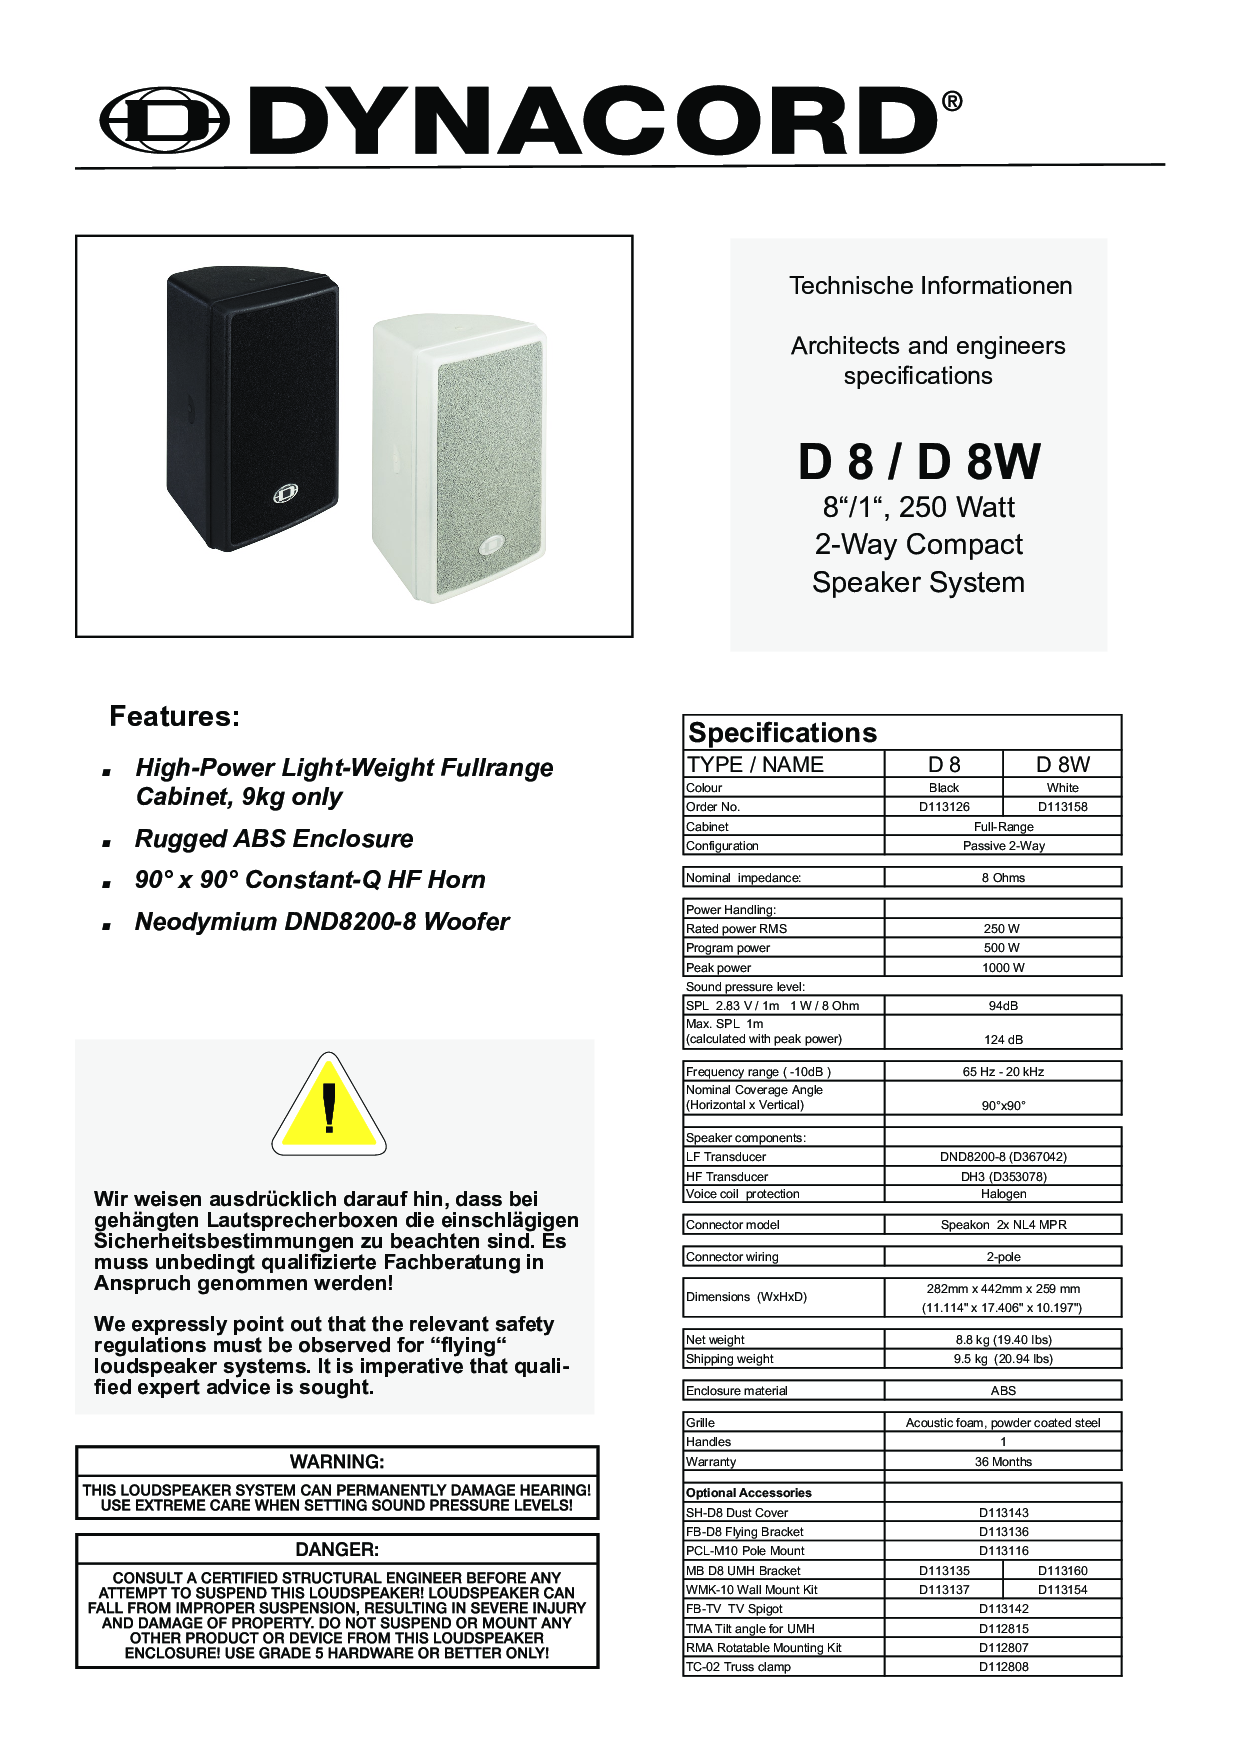 Dynacord D 8W, D 8 User Manual